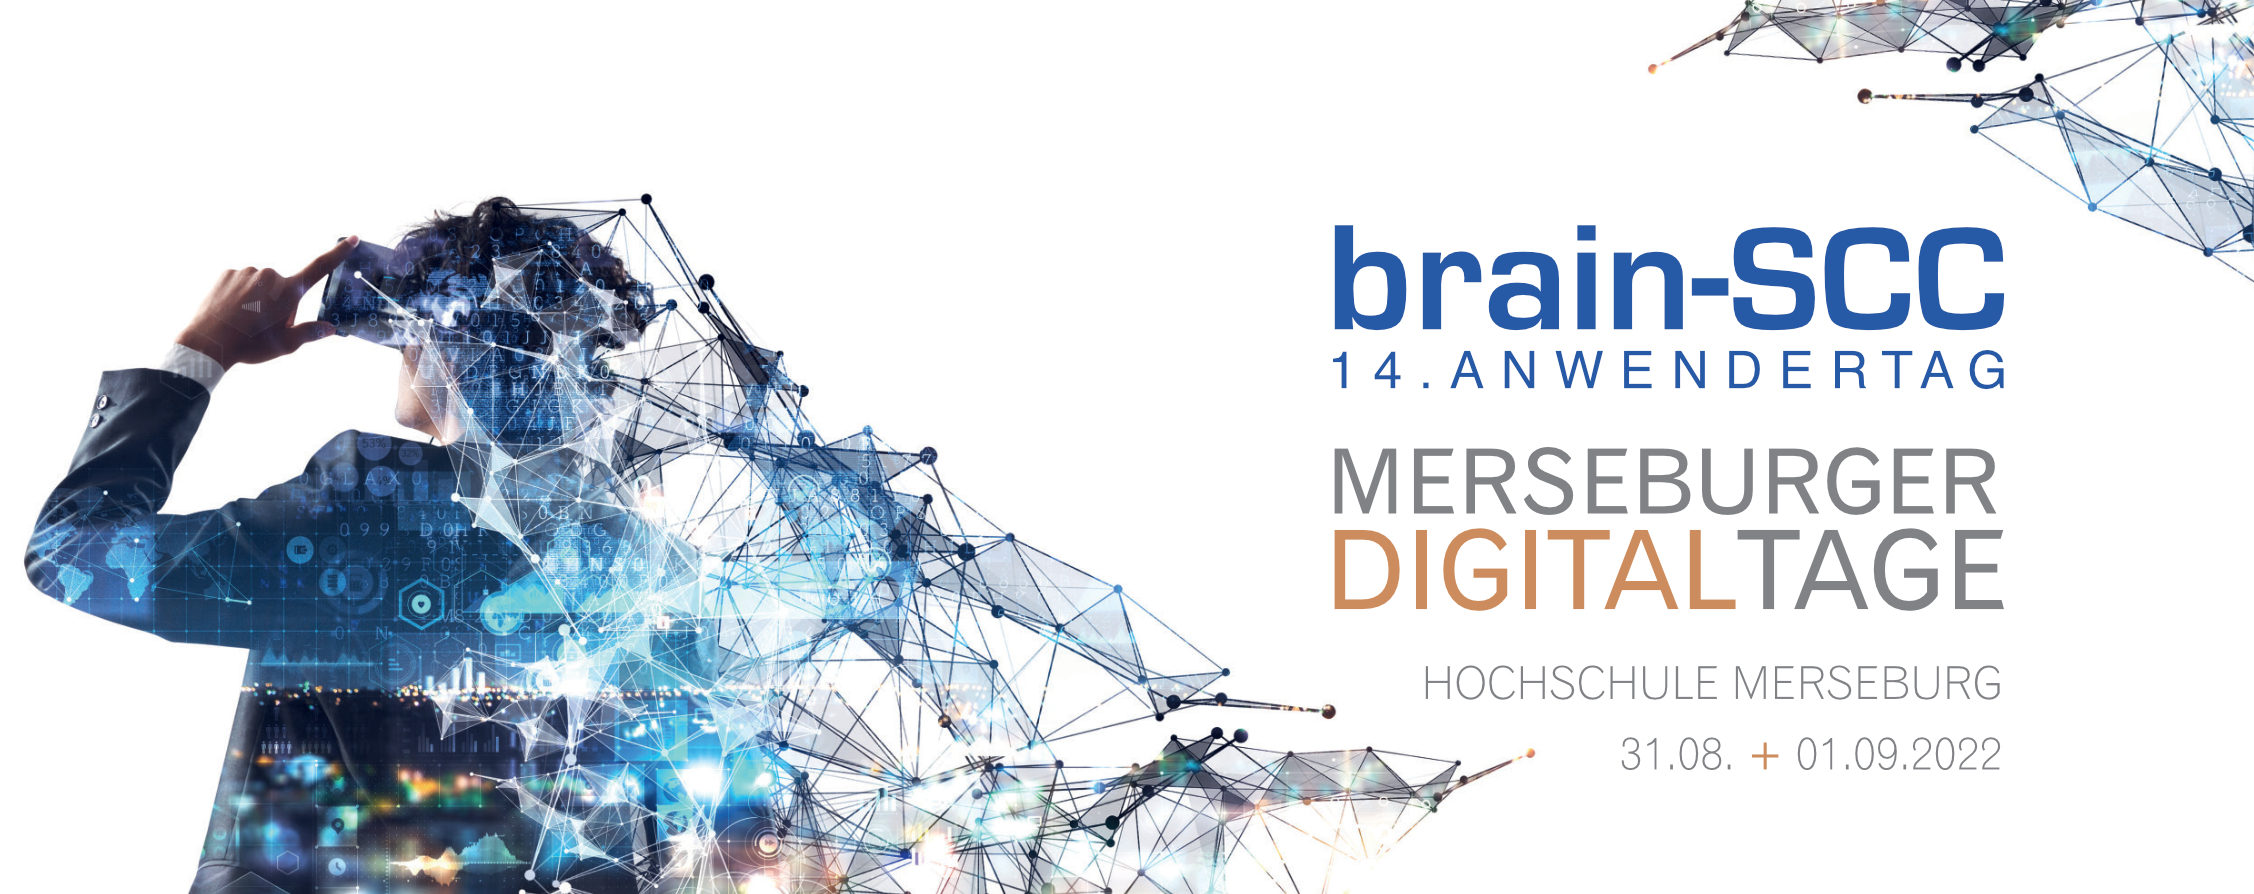 merseburger digitaltage header v3 ©brain-SCC GmbH